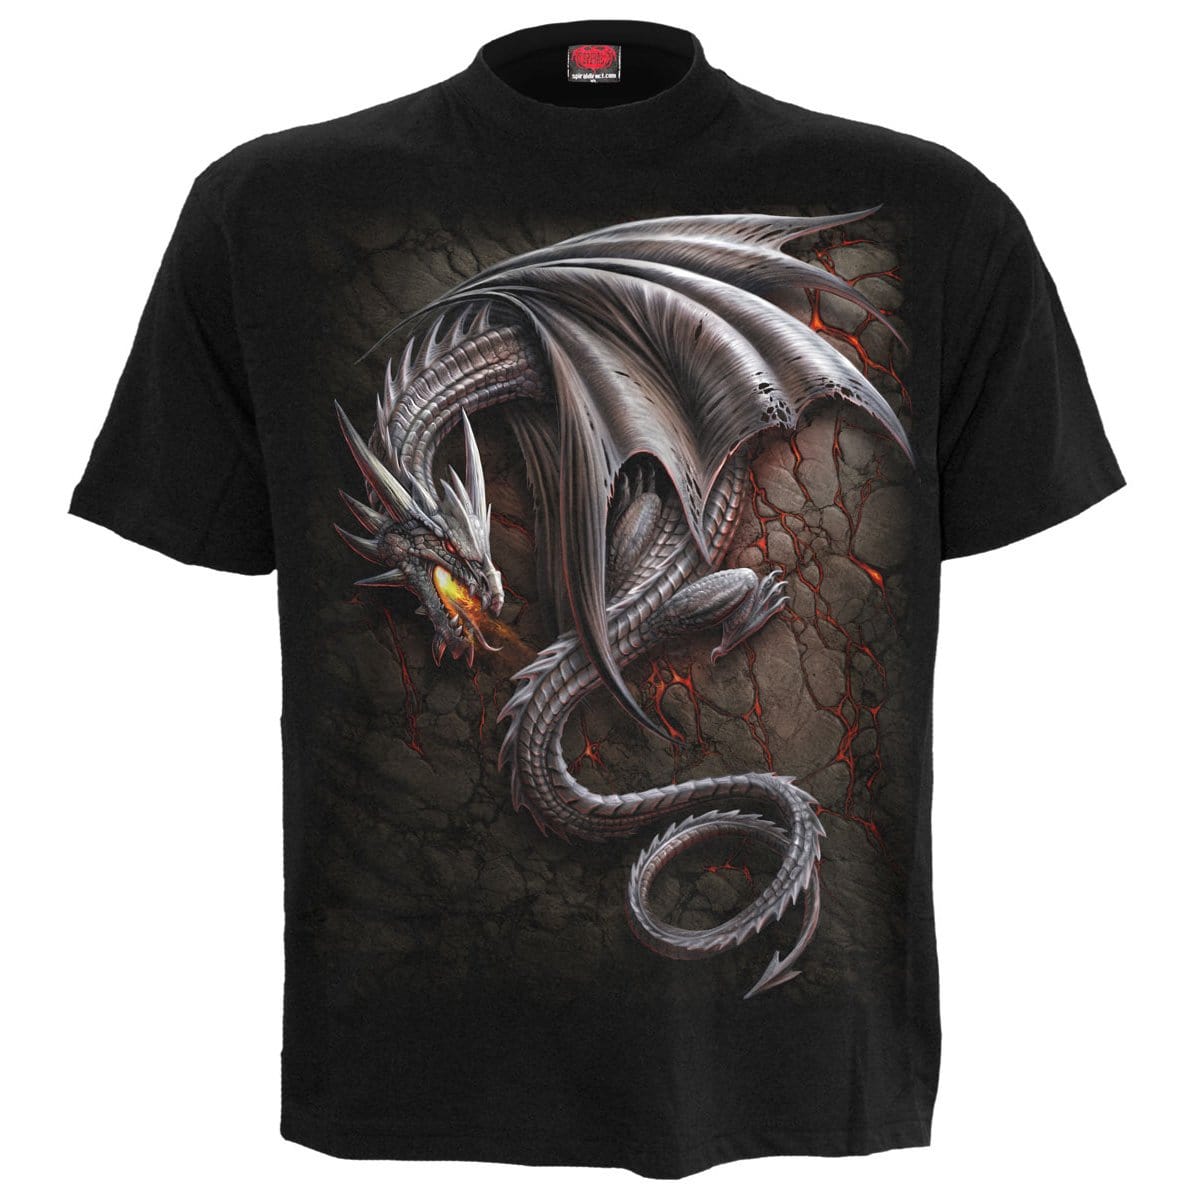 OBSIDIAN - T-Shirt Black - Spiral USA